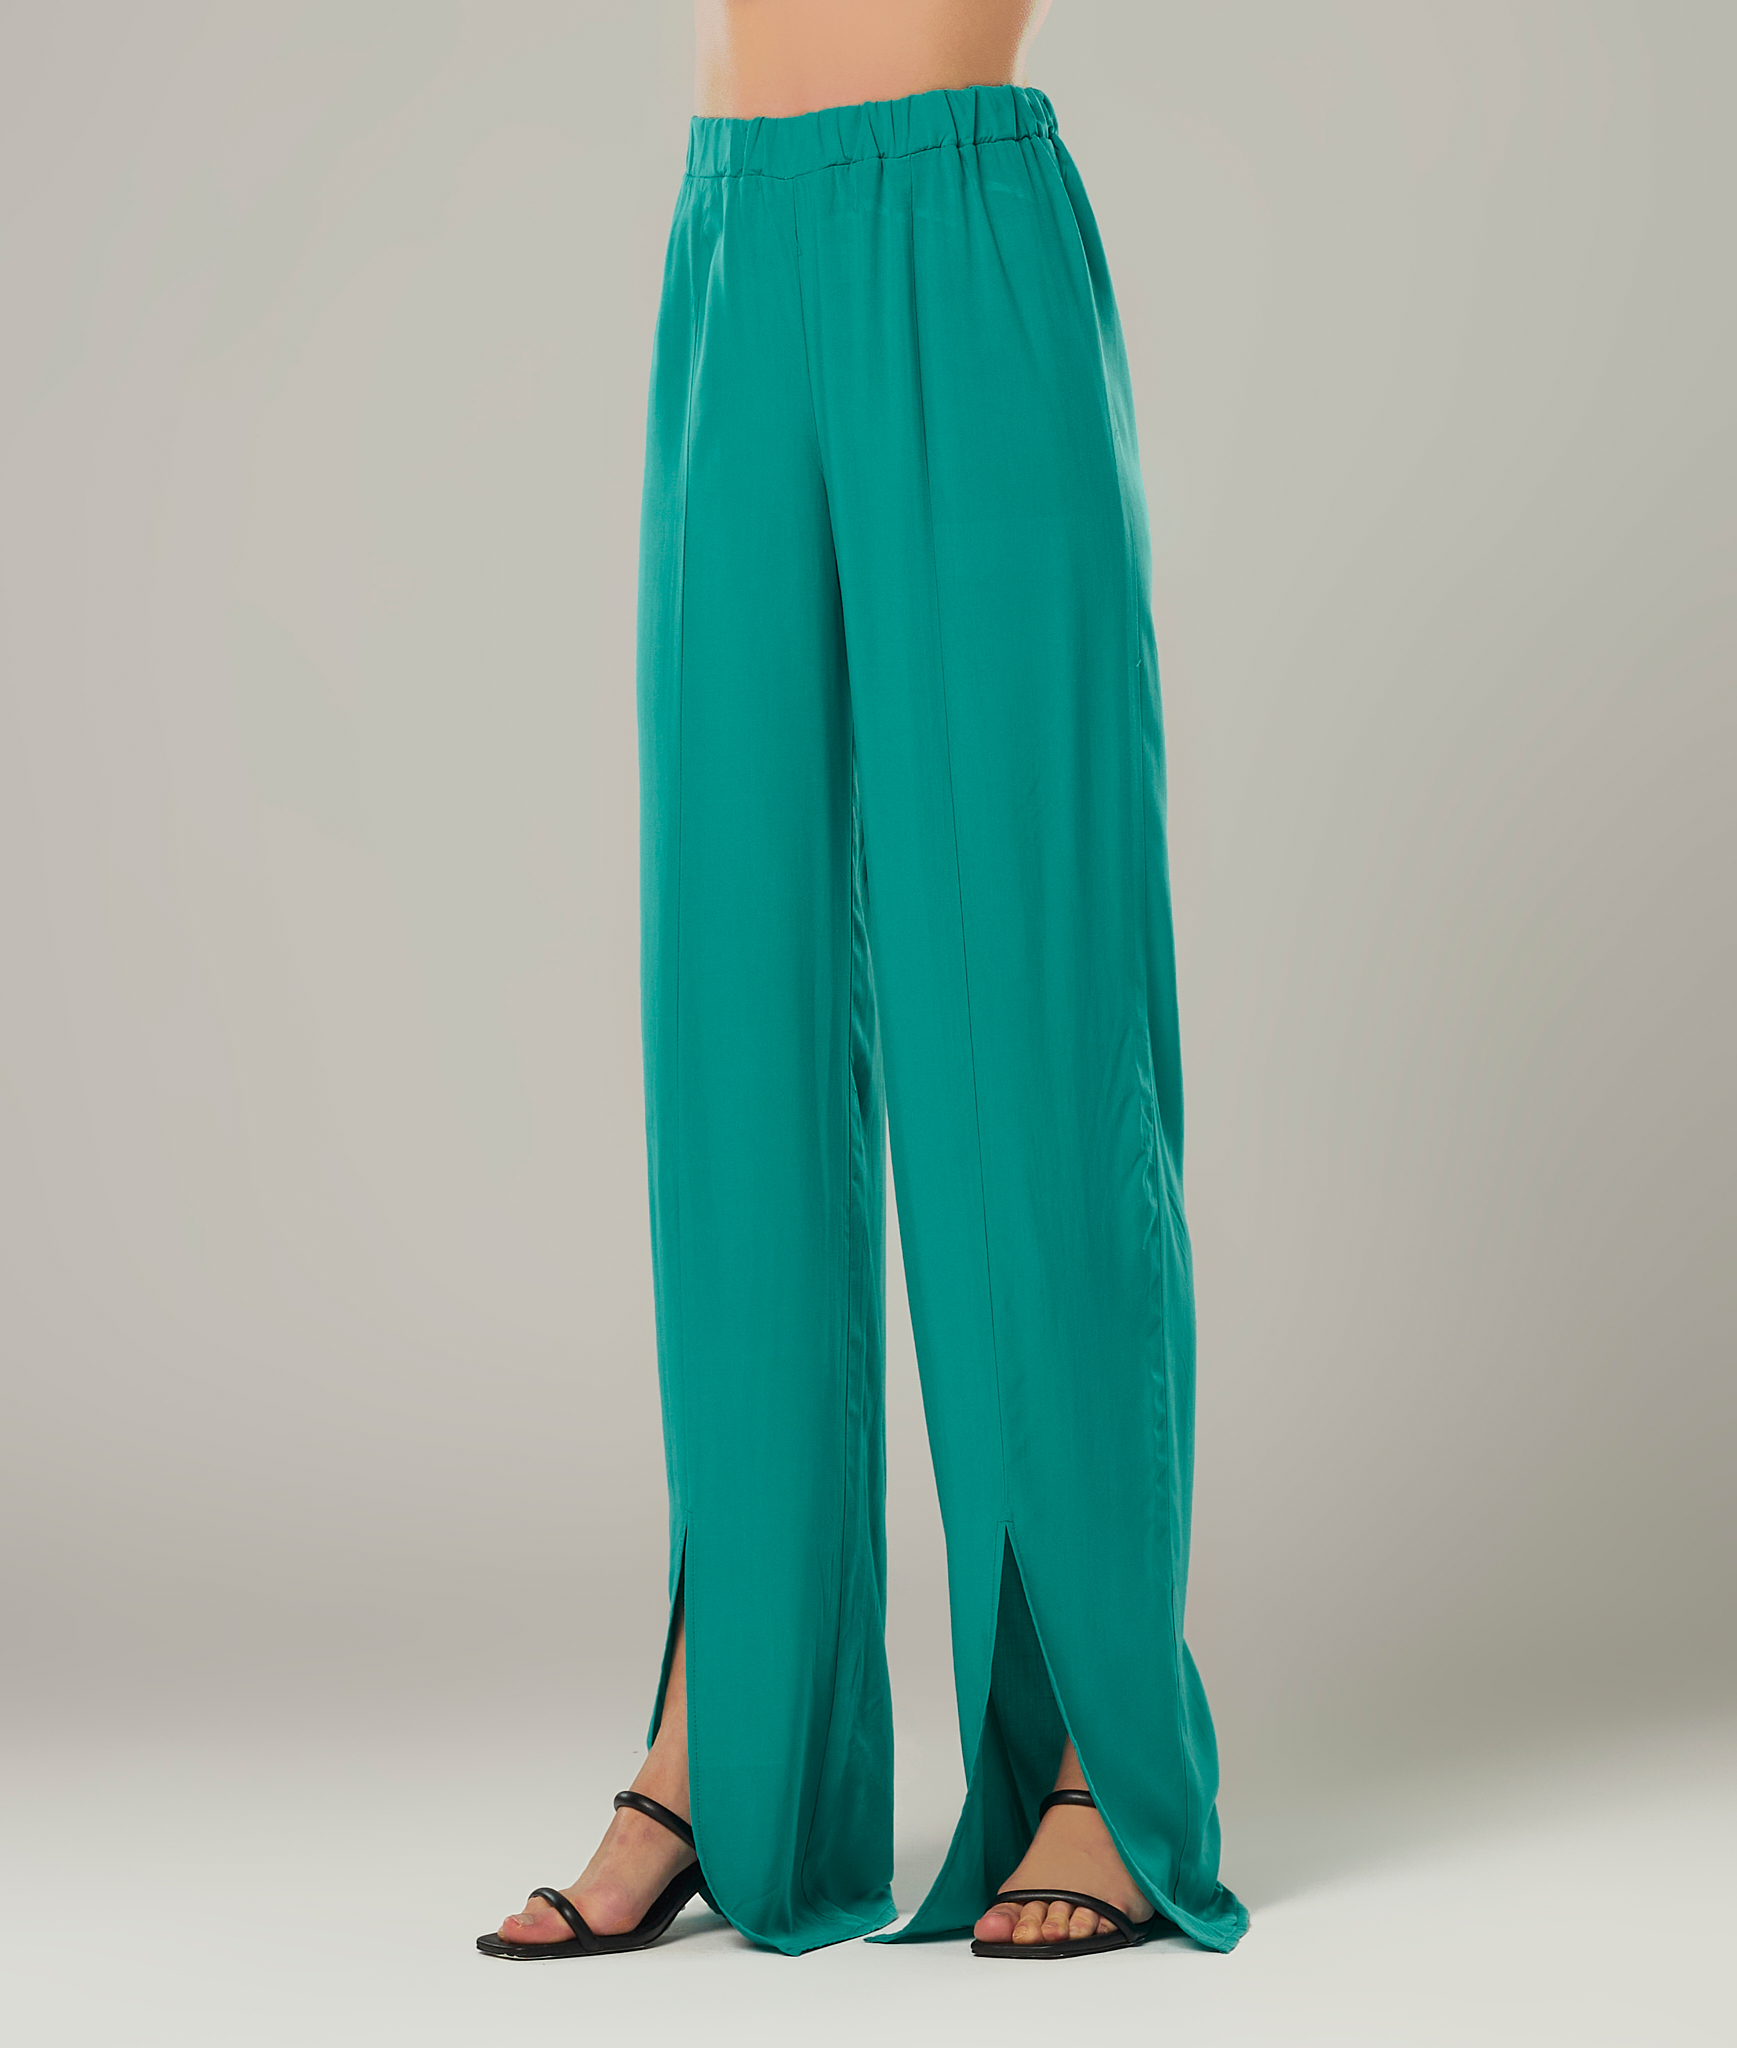 Gilda Turquoise Trousers